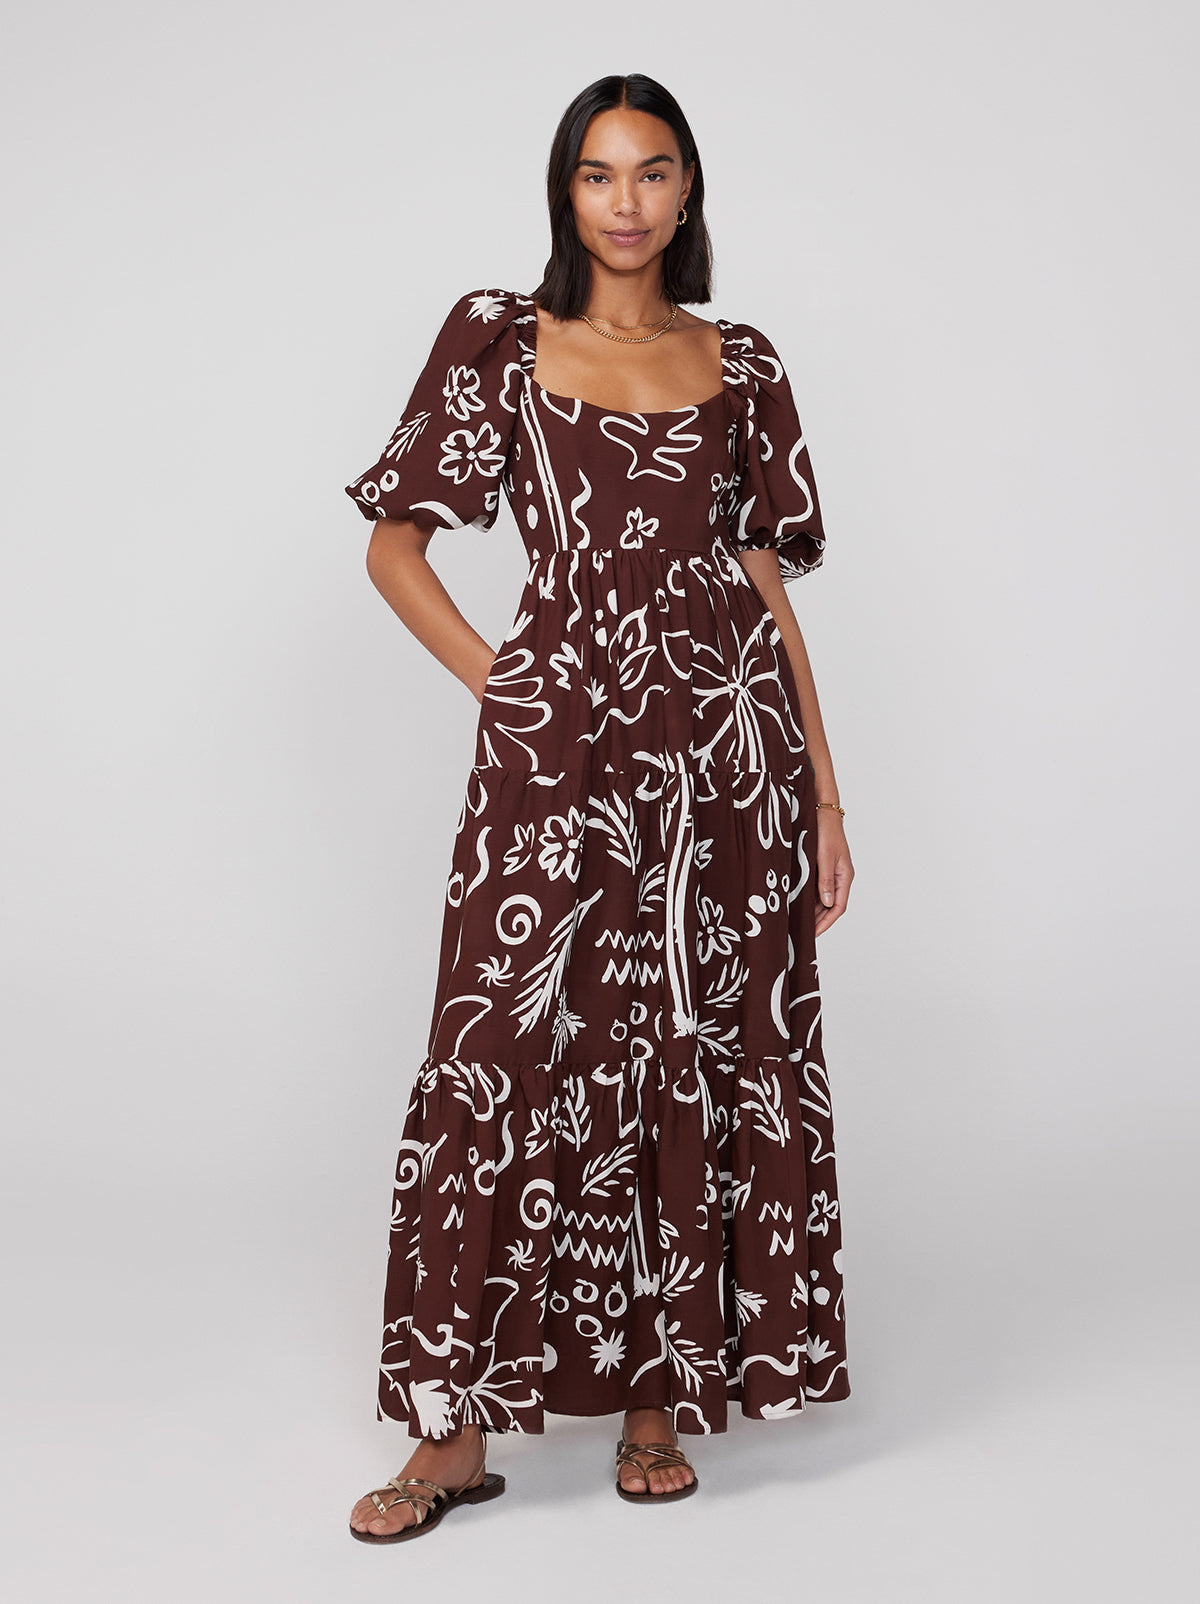 Gianna Coco Palm Print Maxi Dress By KITRI Studio